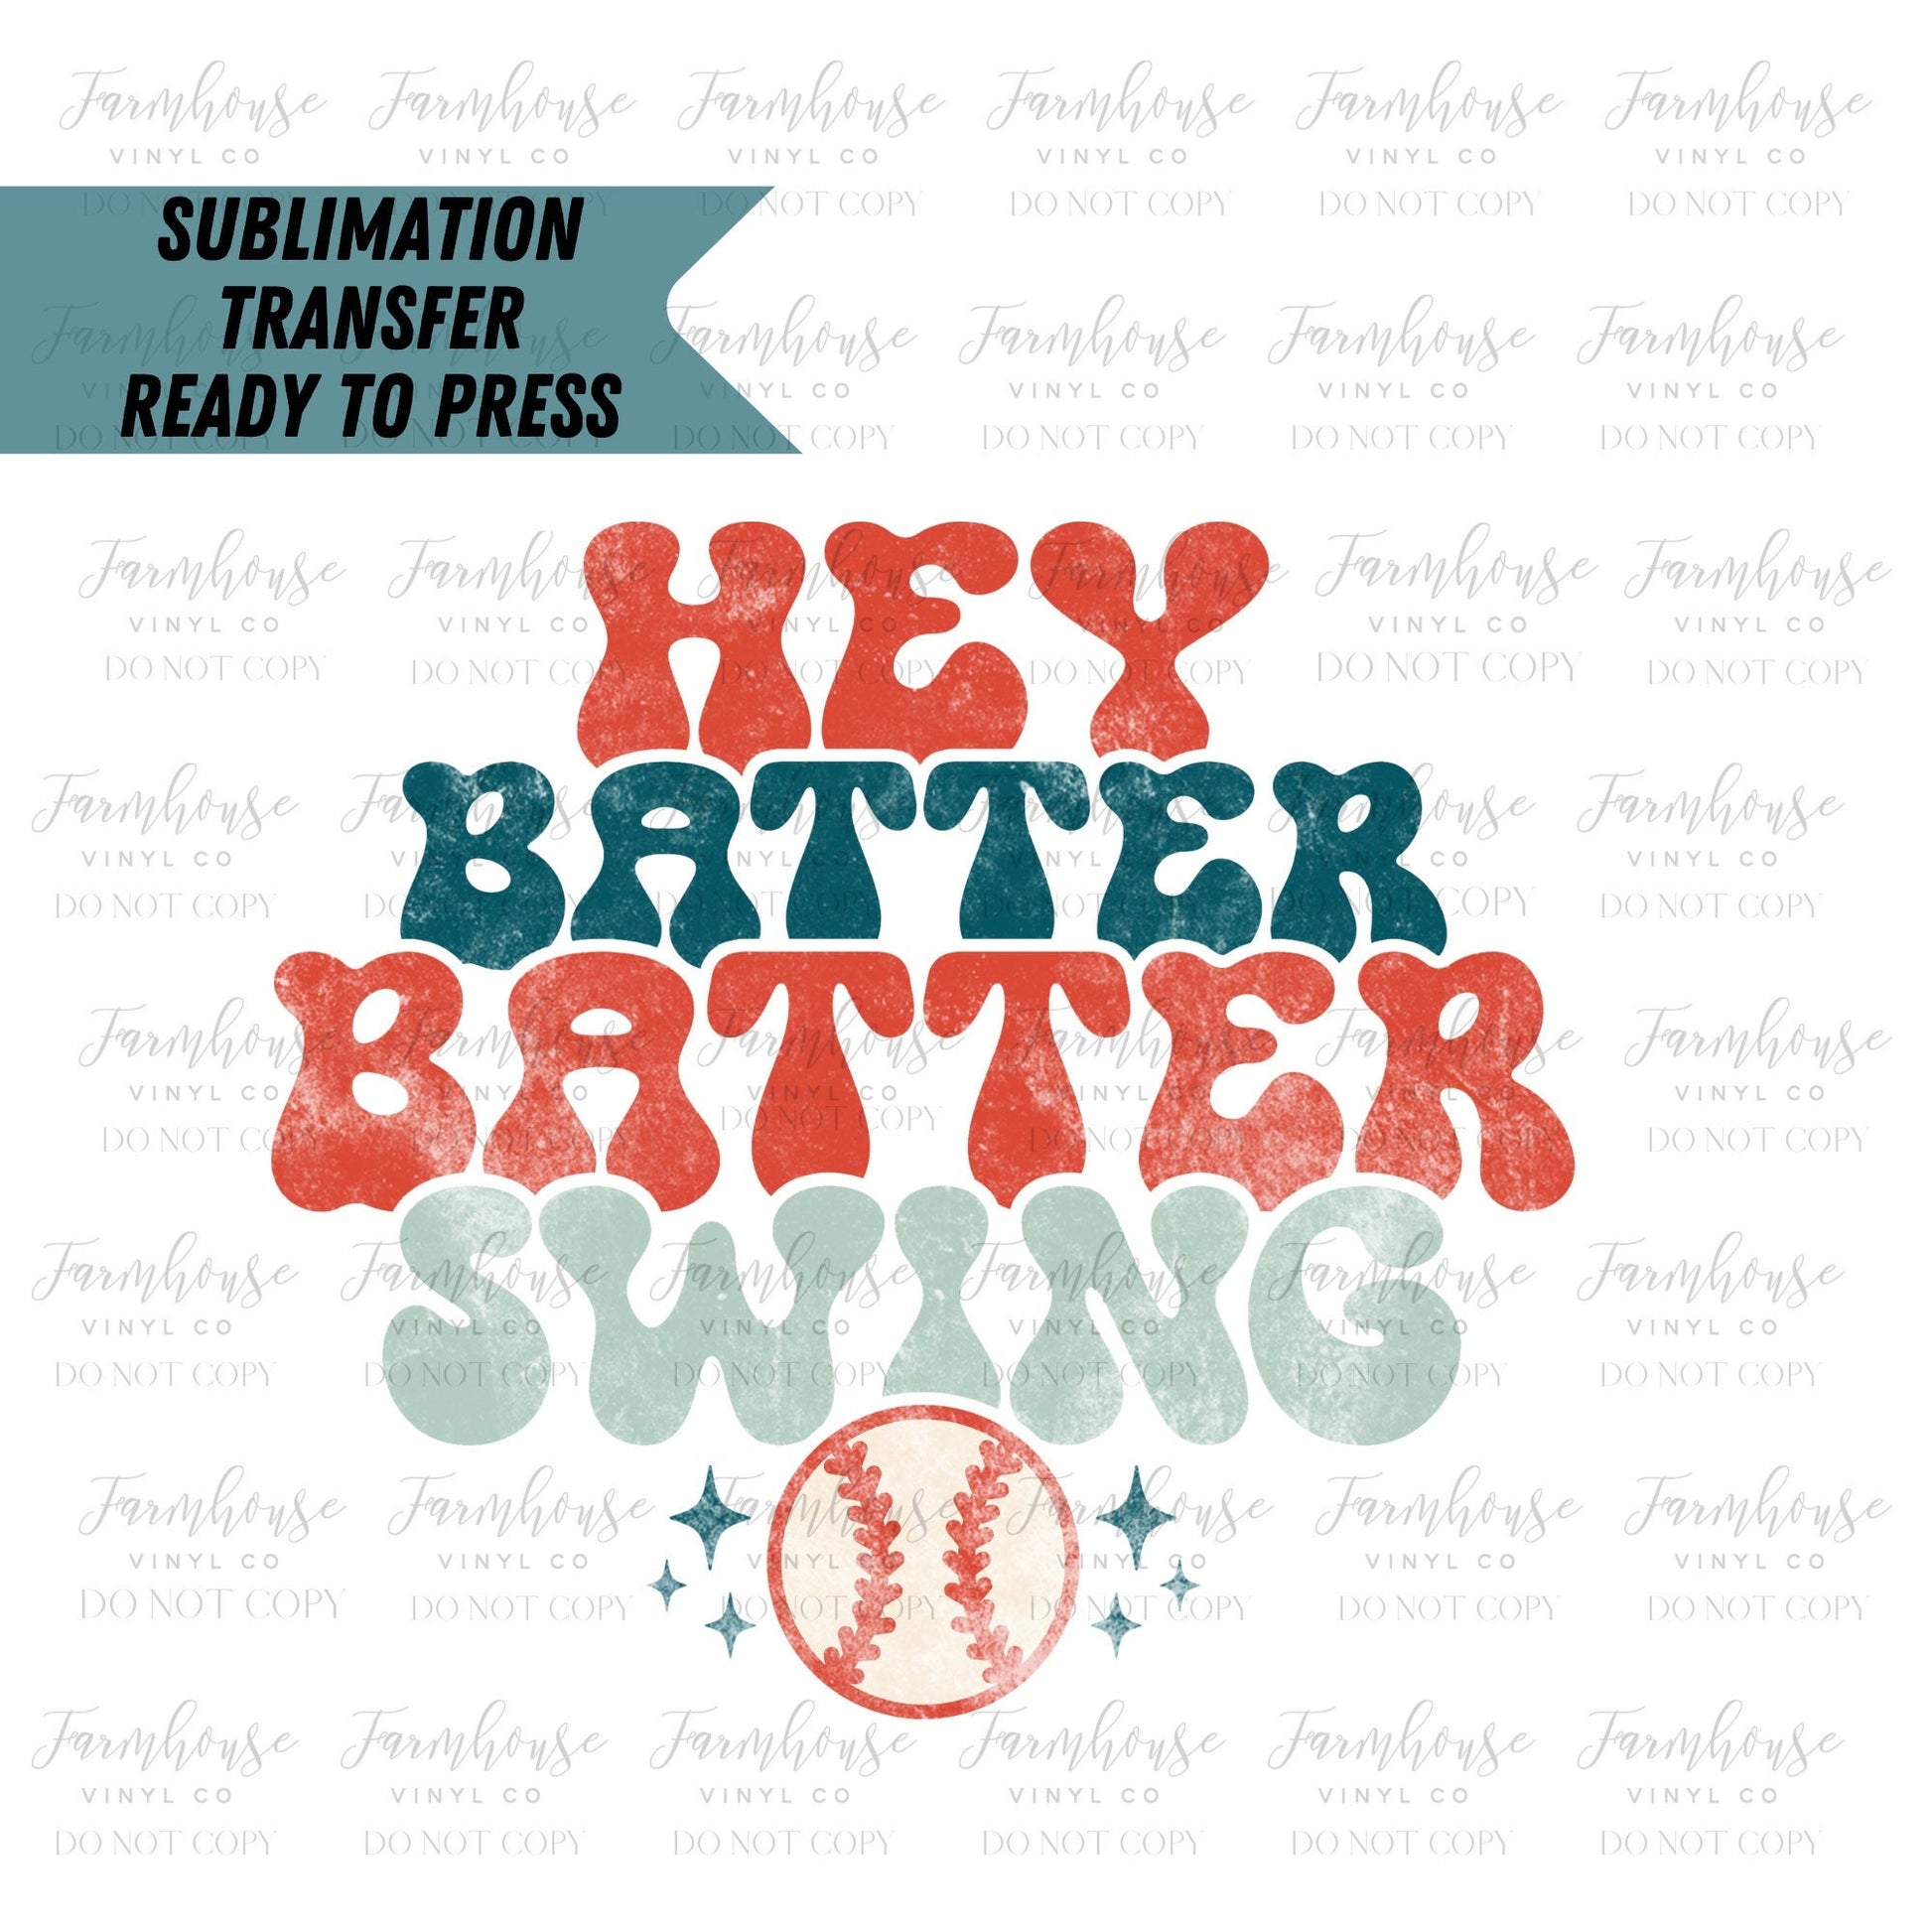 Hey Batter Batter Swing Retro Ready to Press Sublimation Transfer - Farmhouse Vinyl Co